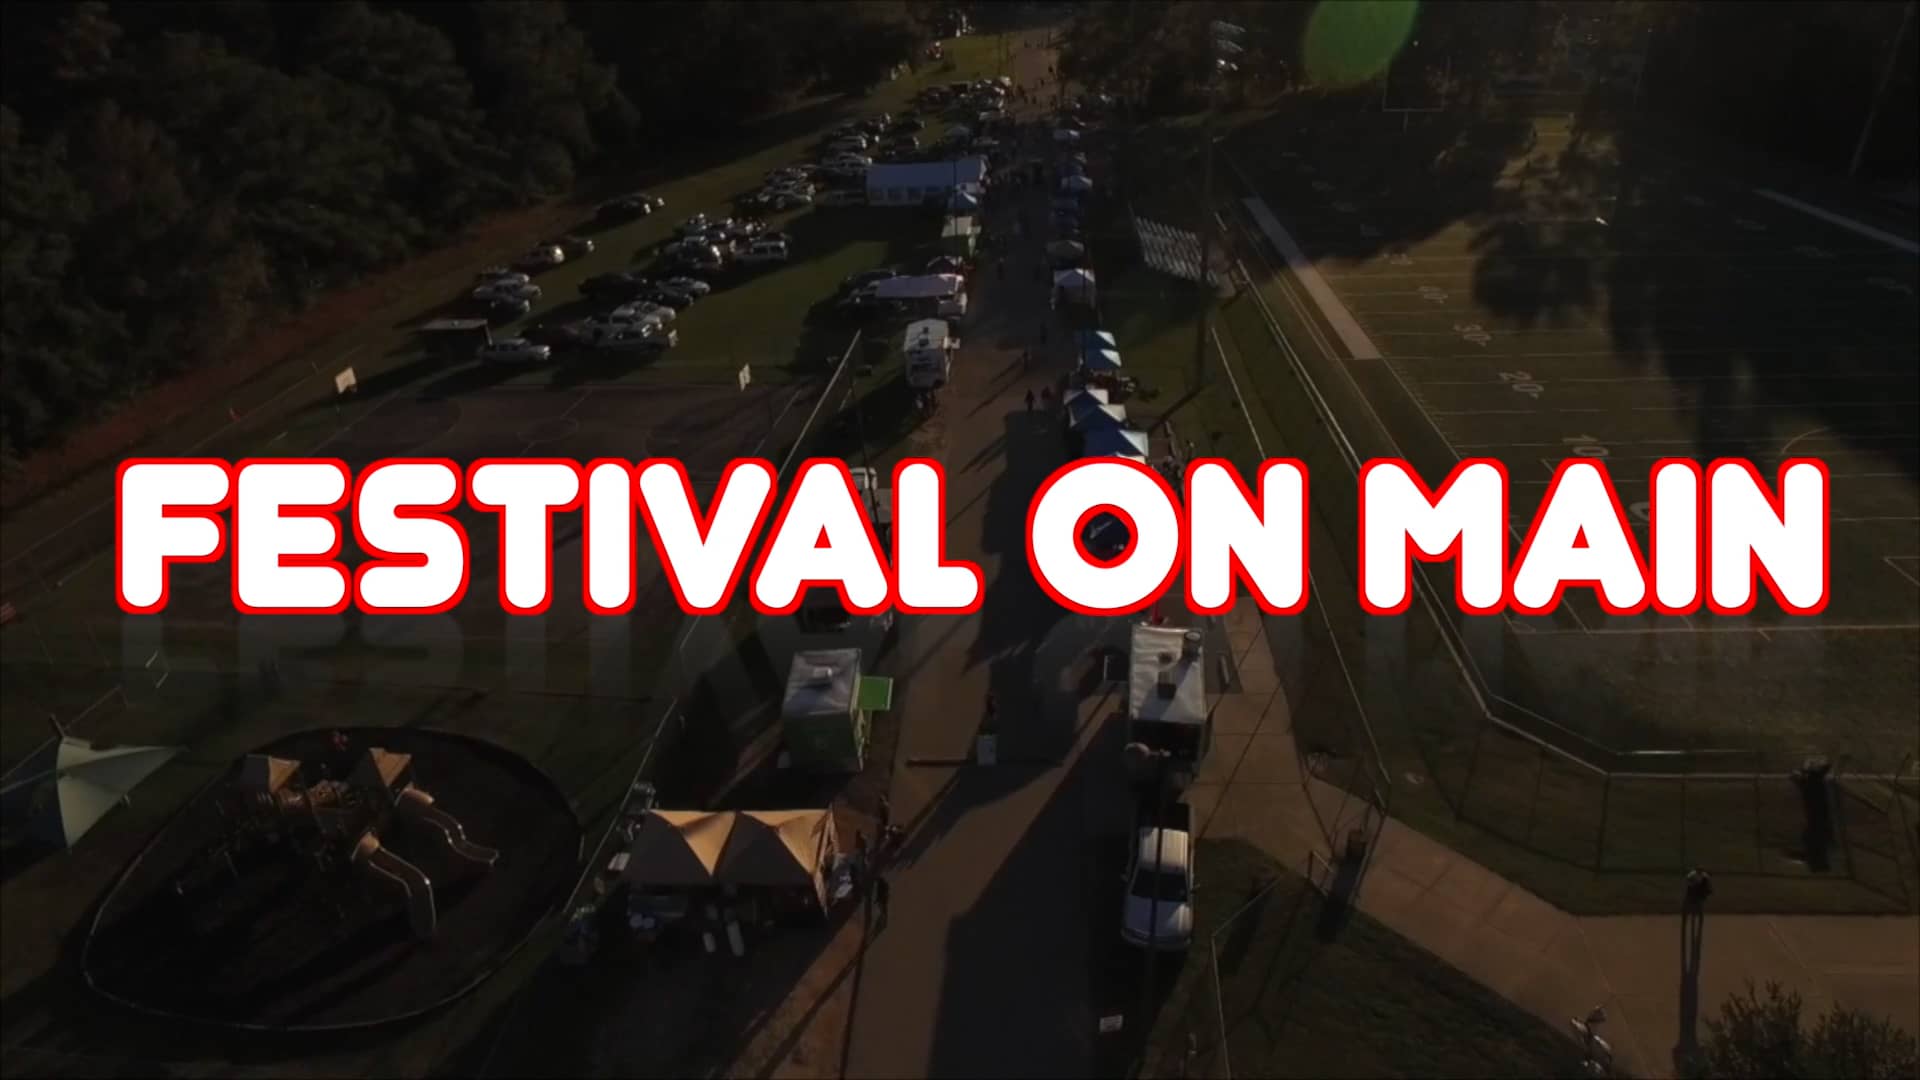 Hardeeville Festival on Main 2021 Promo October 15th16th on Vimeo